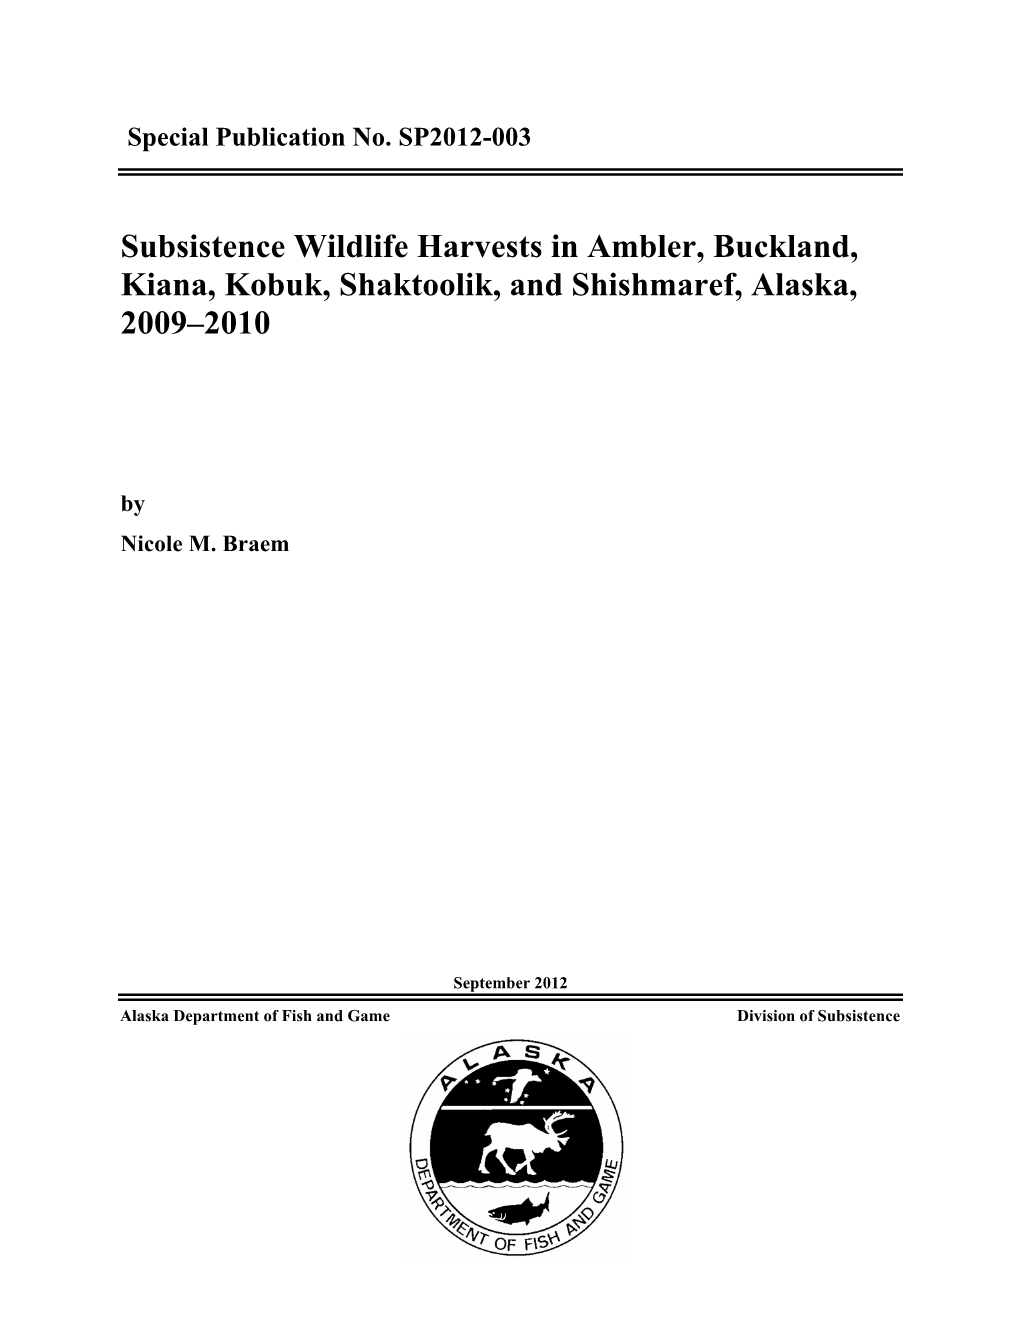 Subsistence Wildlife Harvests in Ambler, Buckland, Kiana, Kobuk, Shaktoolik, and Shishmaref, Alaska, 2009–2010